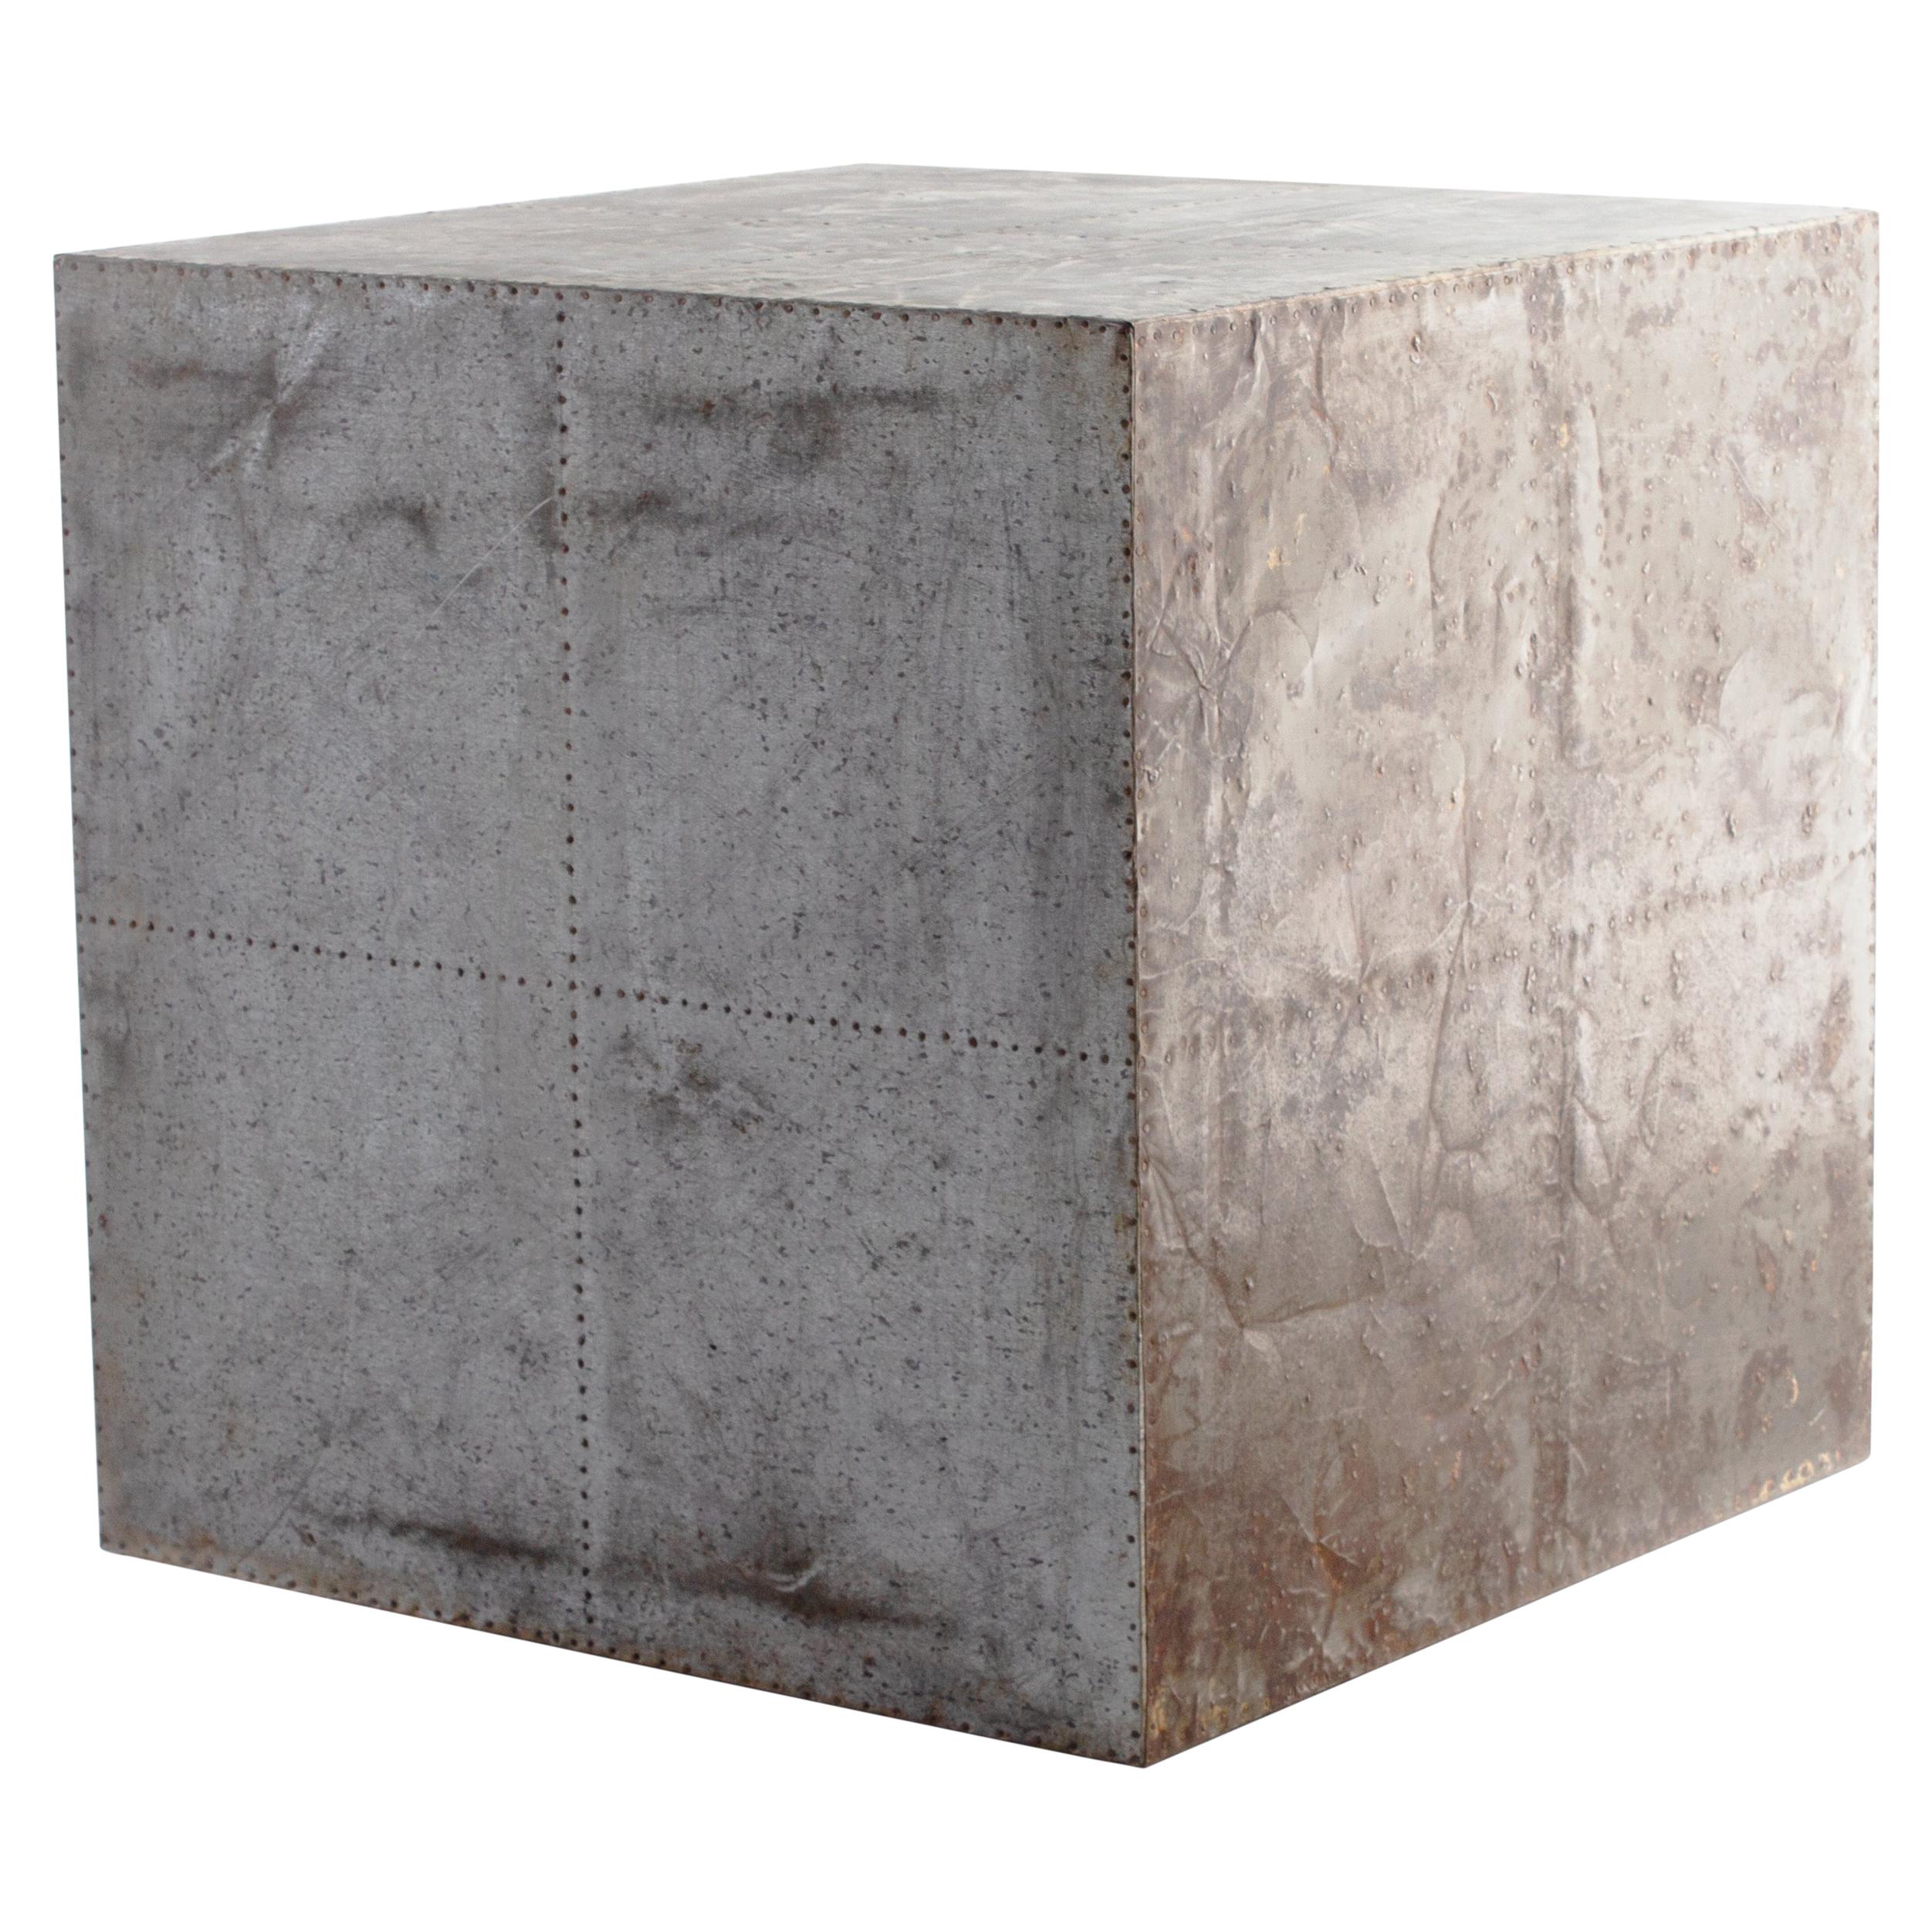 Galvenized Metal Cube End Table